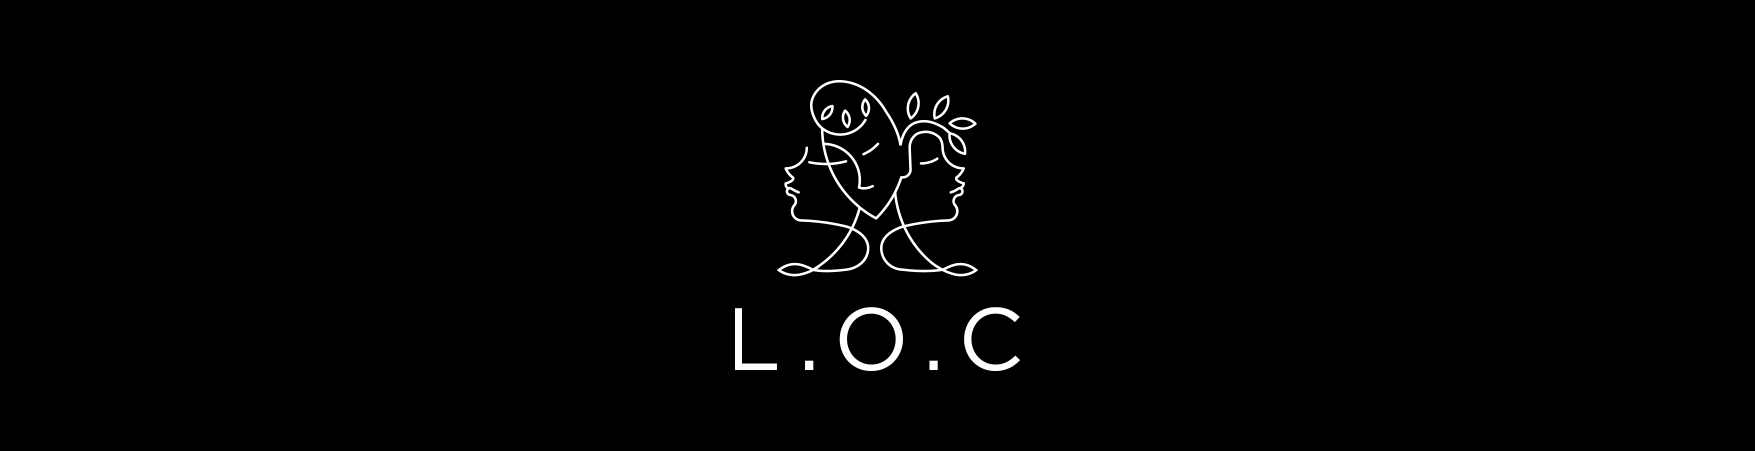 L.O.C